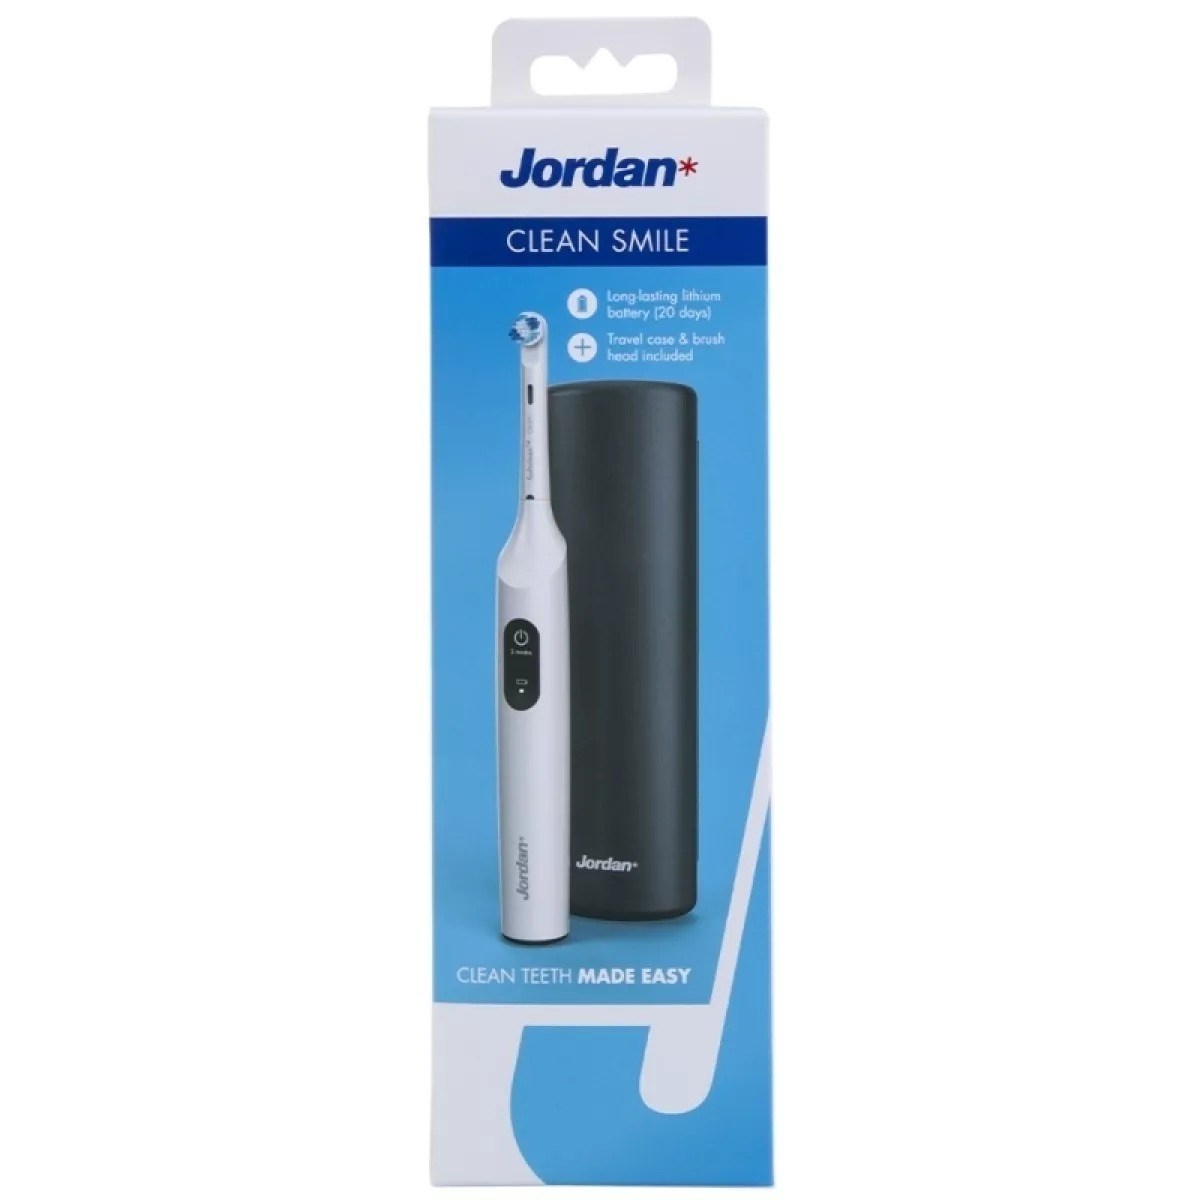 #1 - Jordan Clean Smile Electric Toothbrush - Black